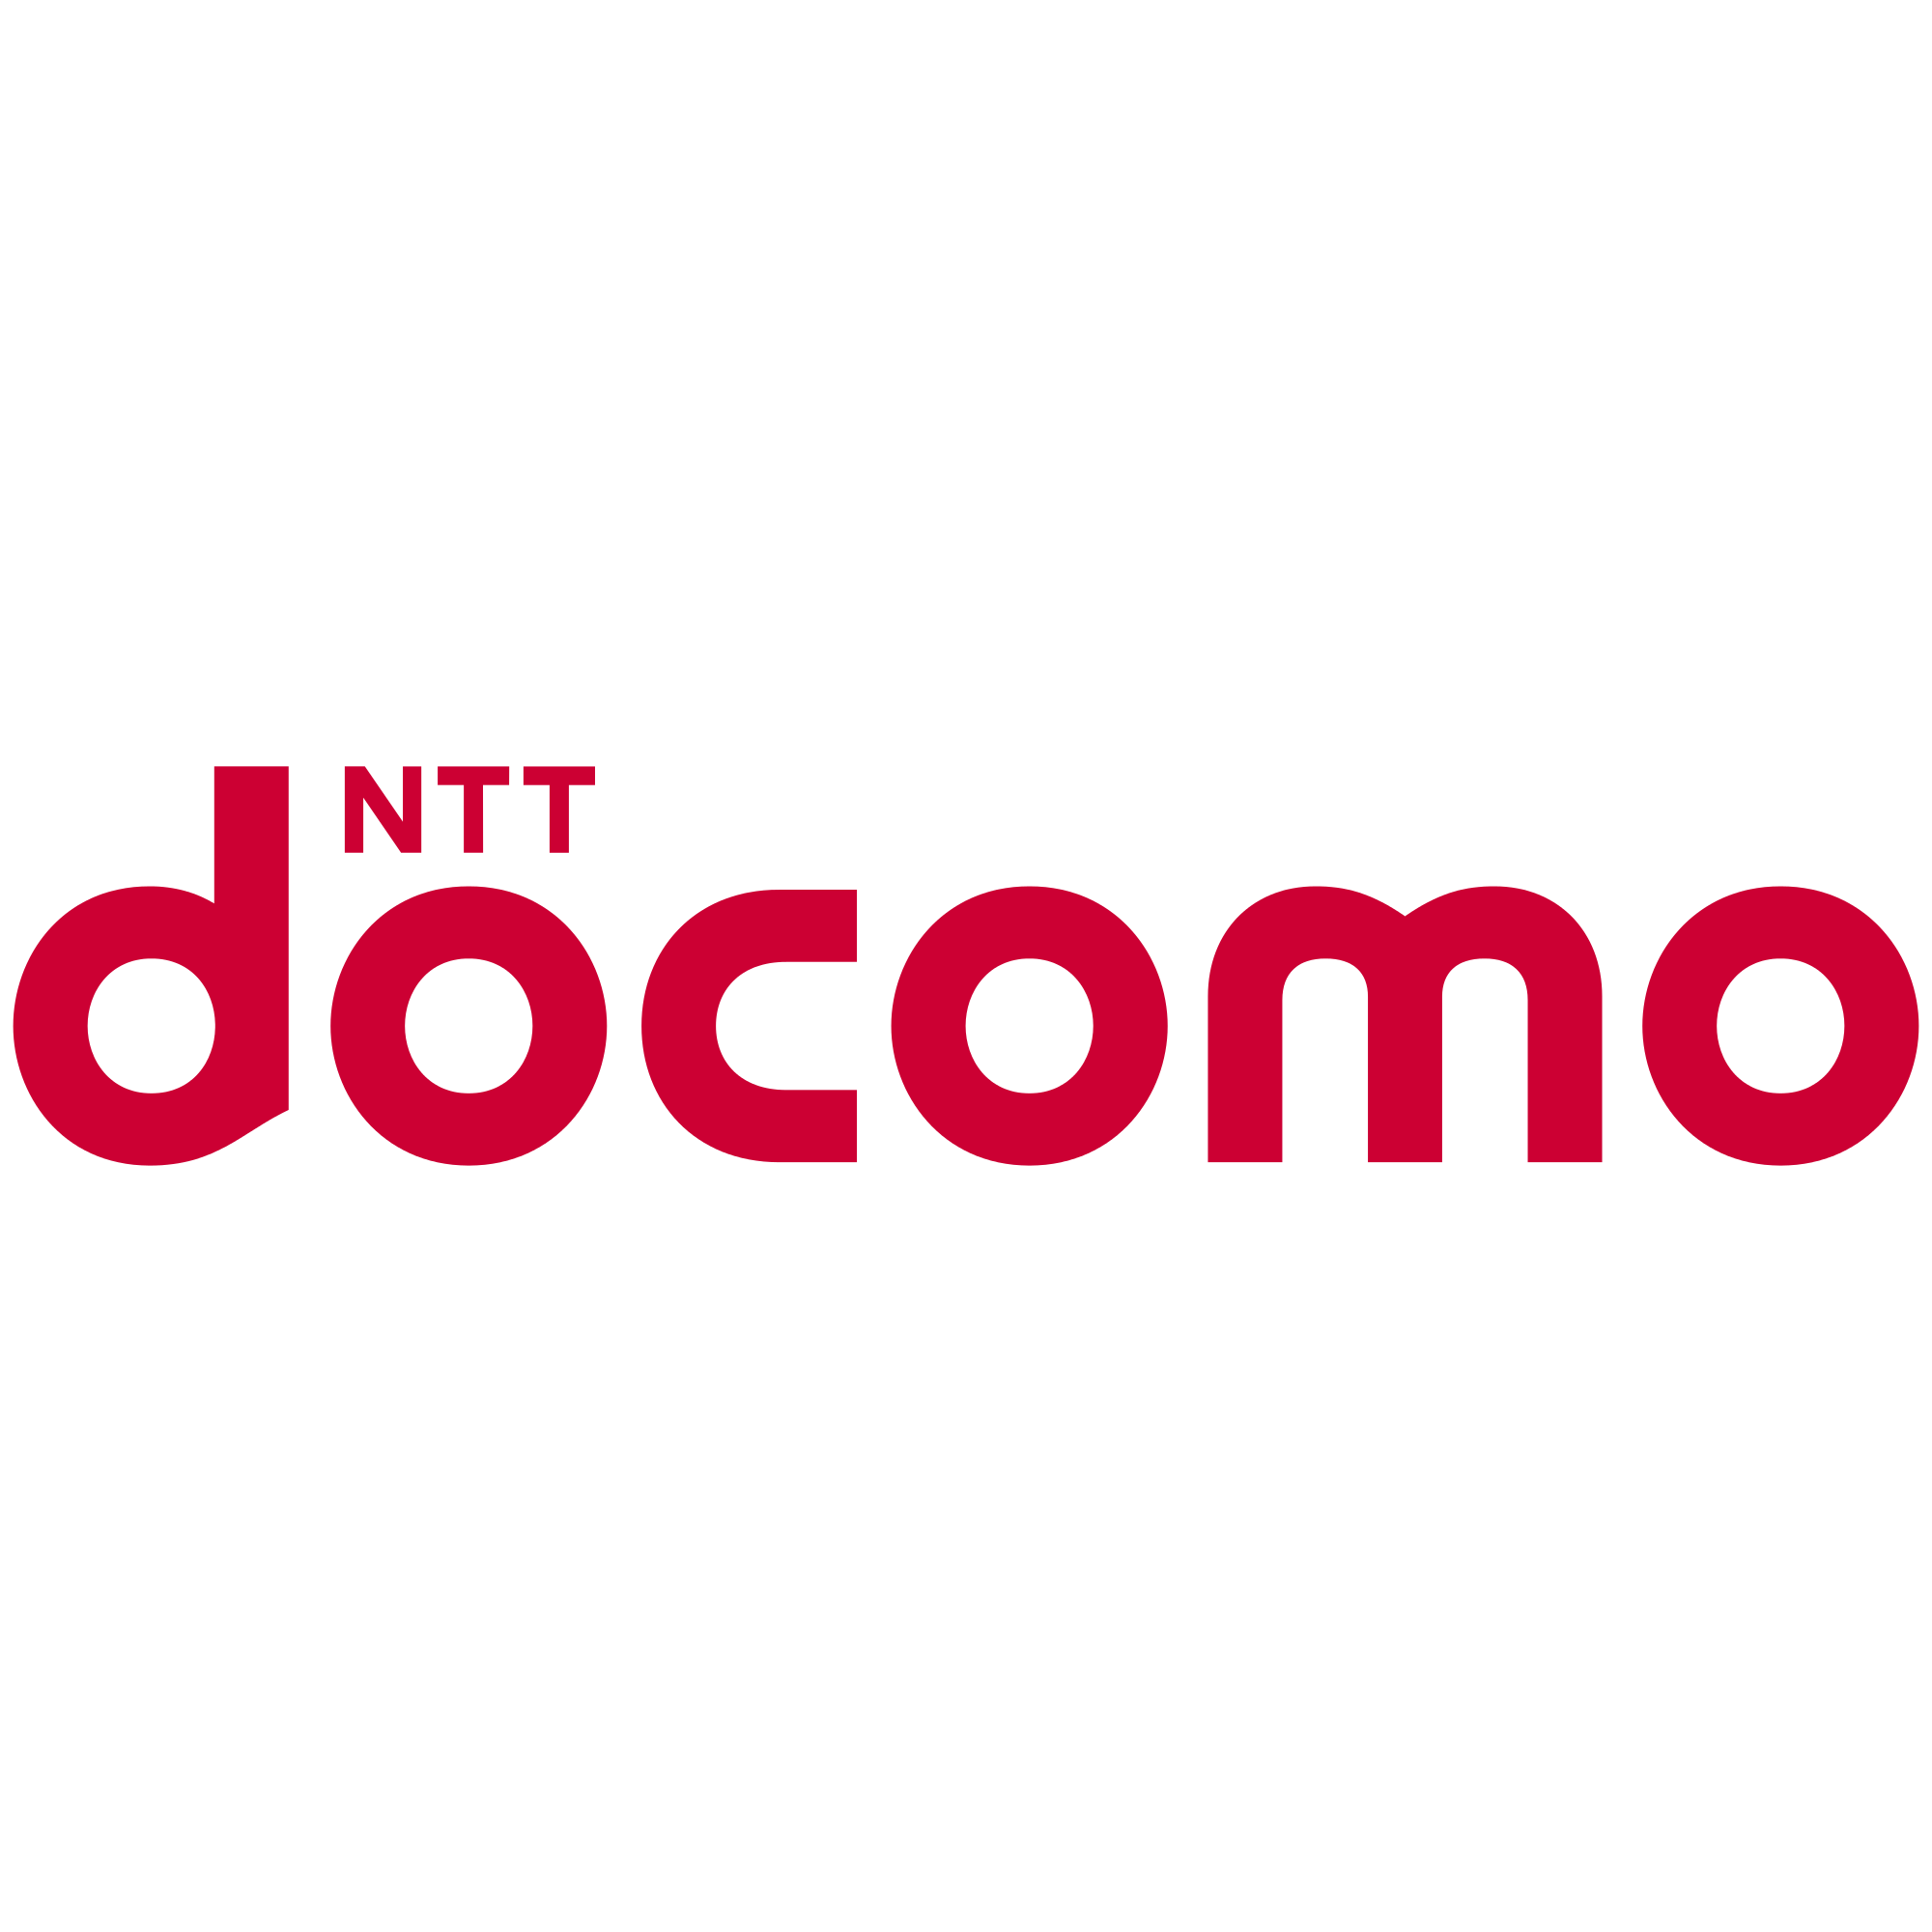 NTT DOCOMO - Halberd Bastion